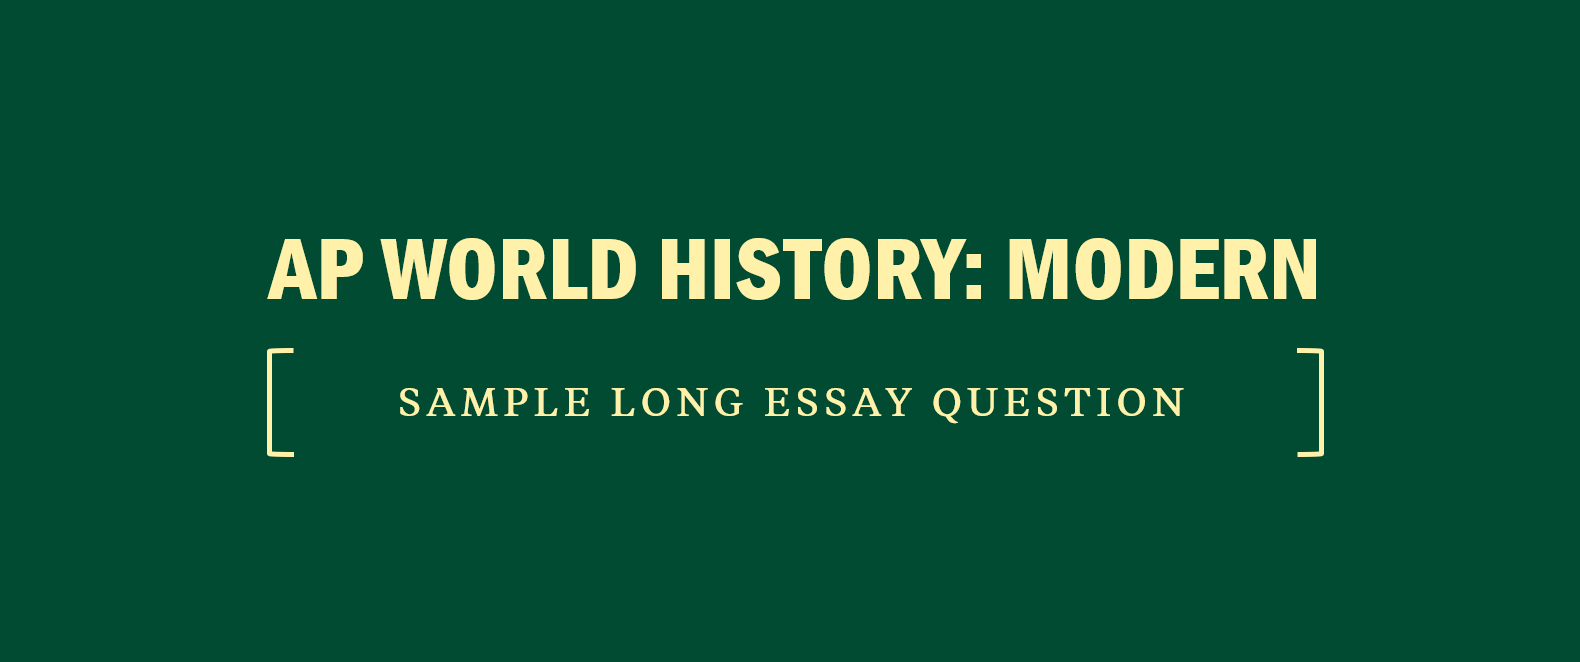 ap world history long essay questions